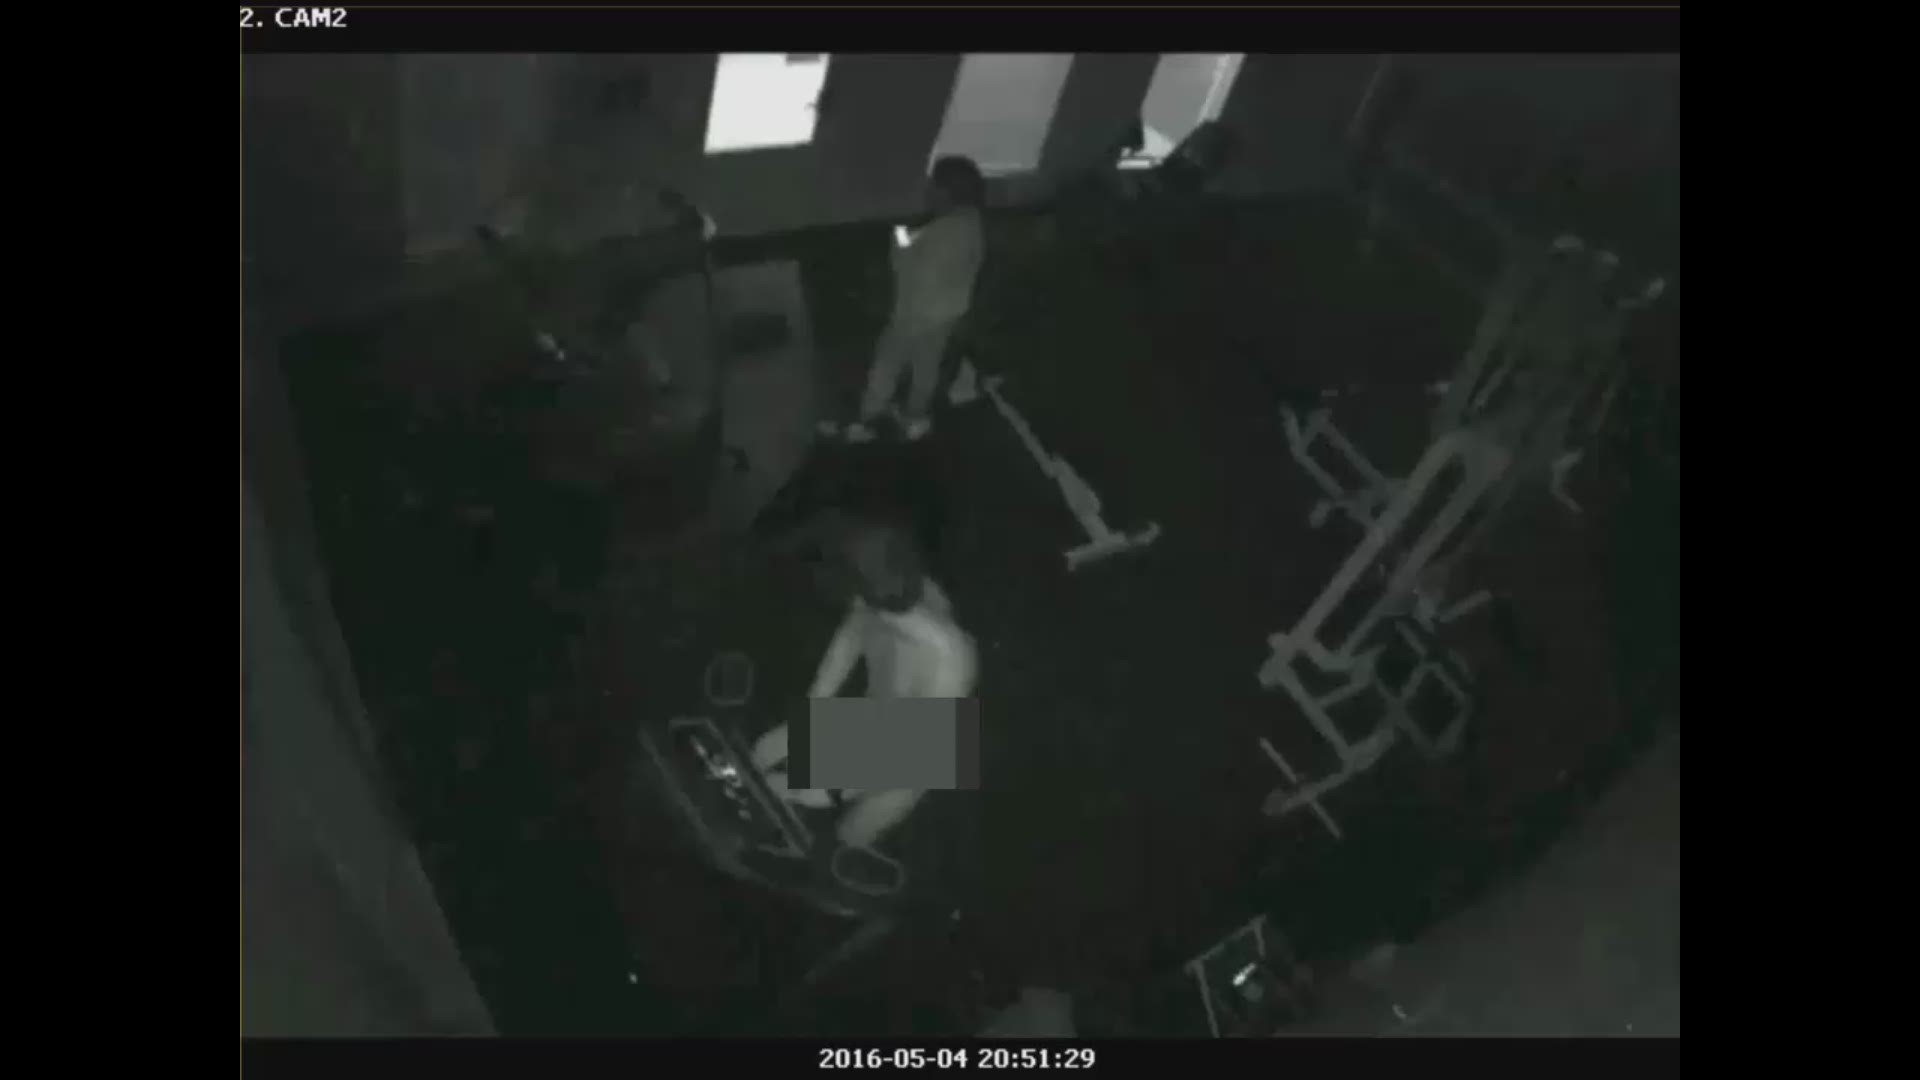 Surveillance video of man identified by police as Jaykob Ruiz, 18, exposing himself in apartment complex gym.